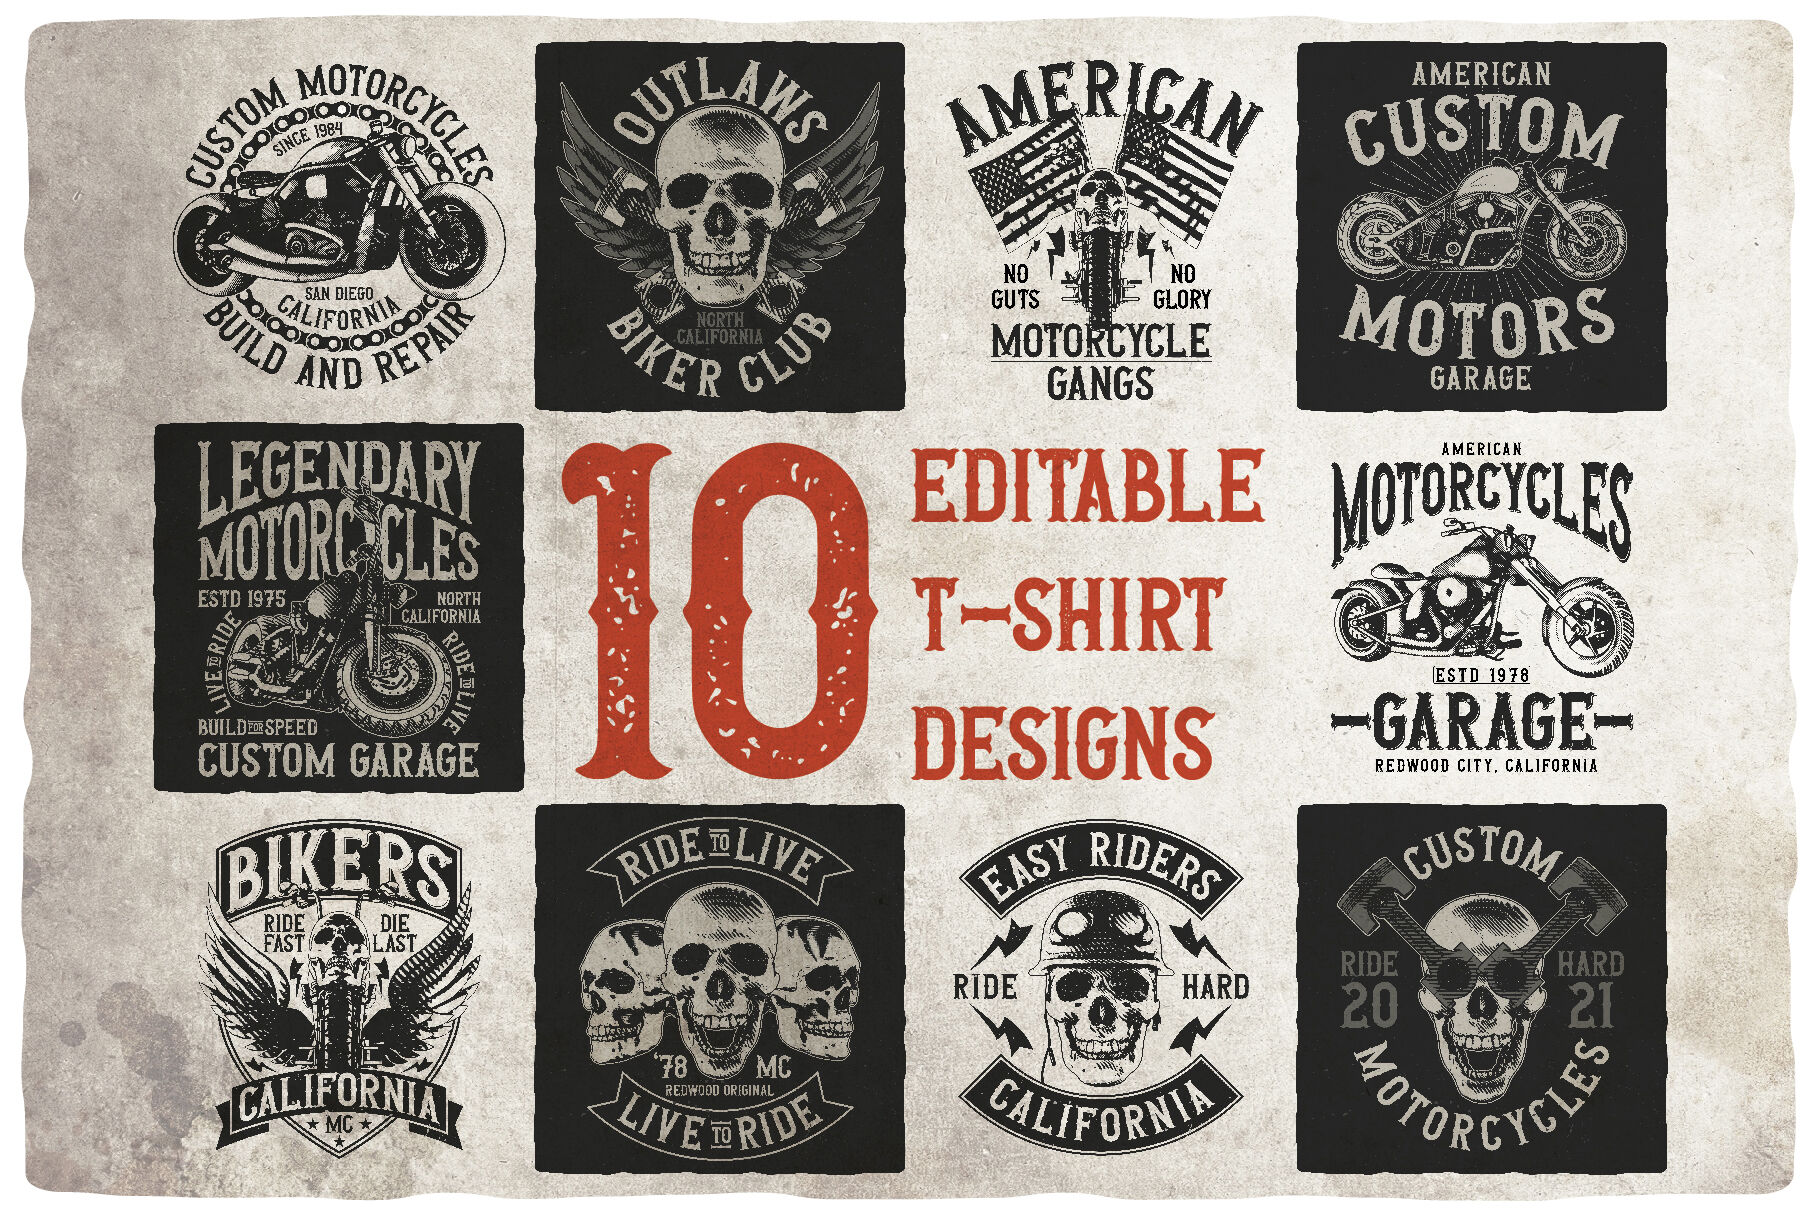 Editable t-shirts designs.